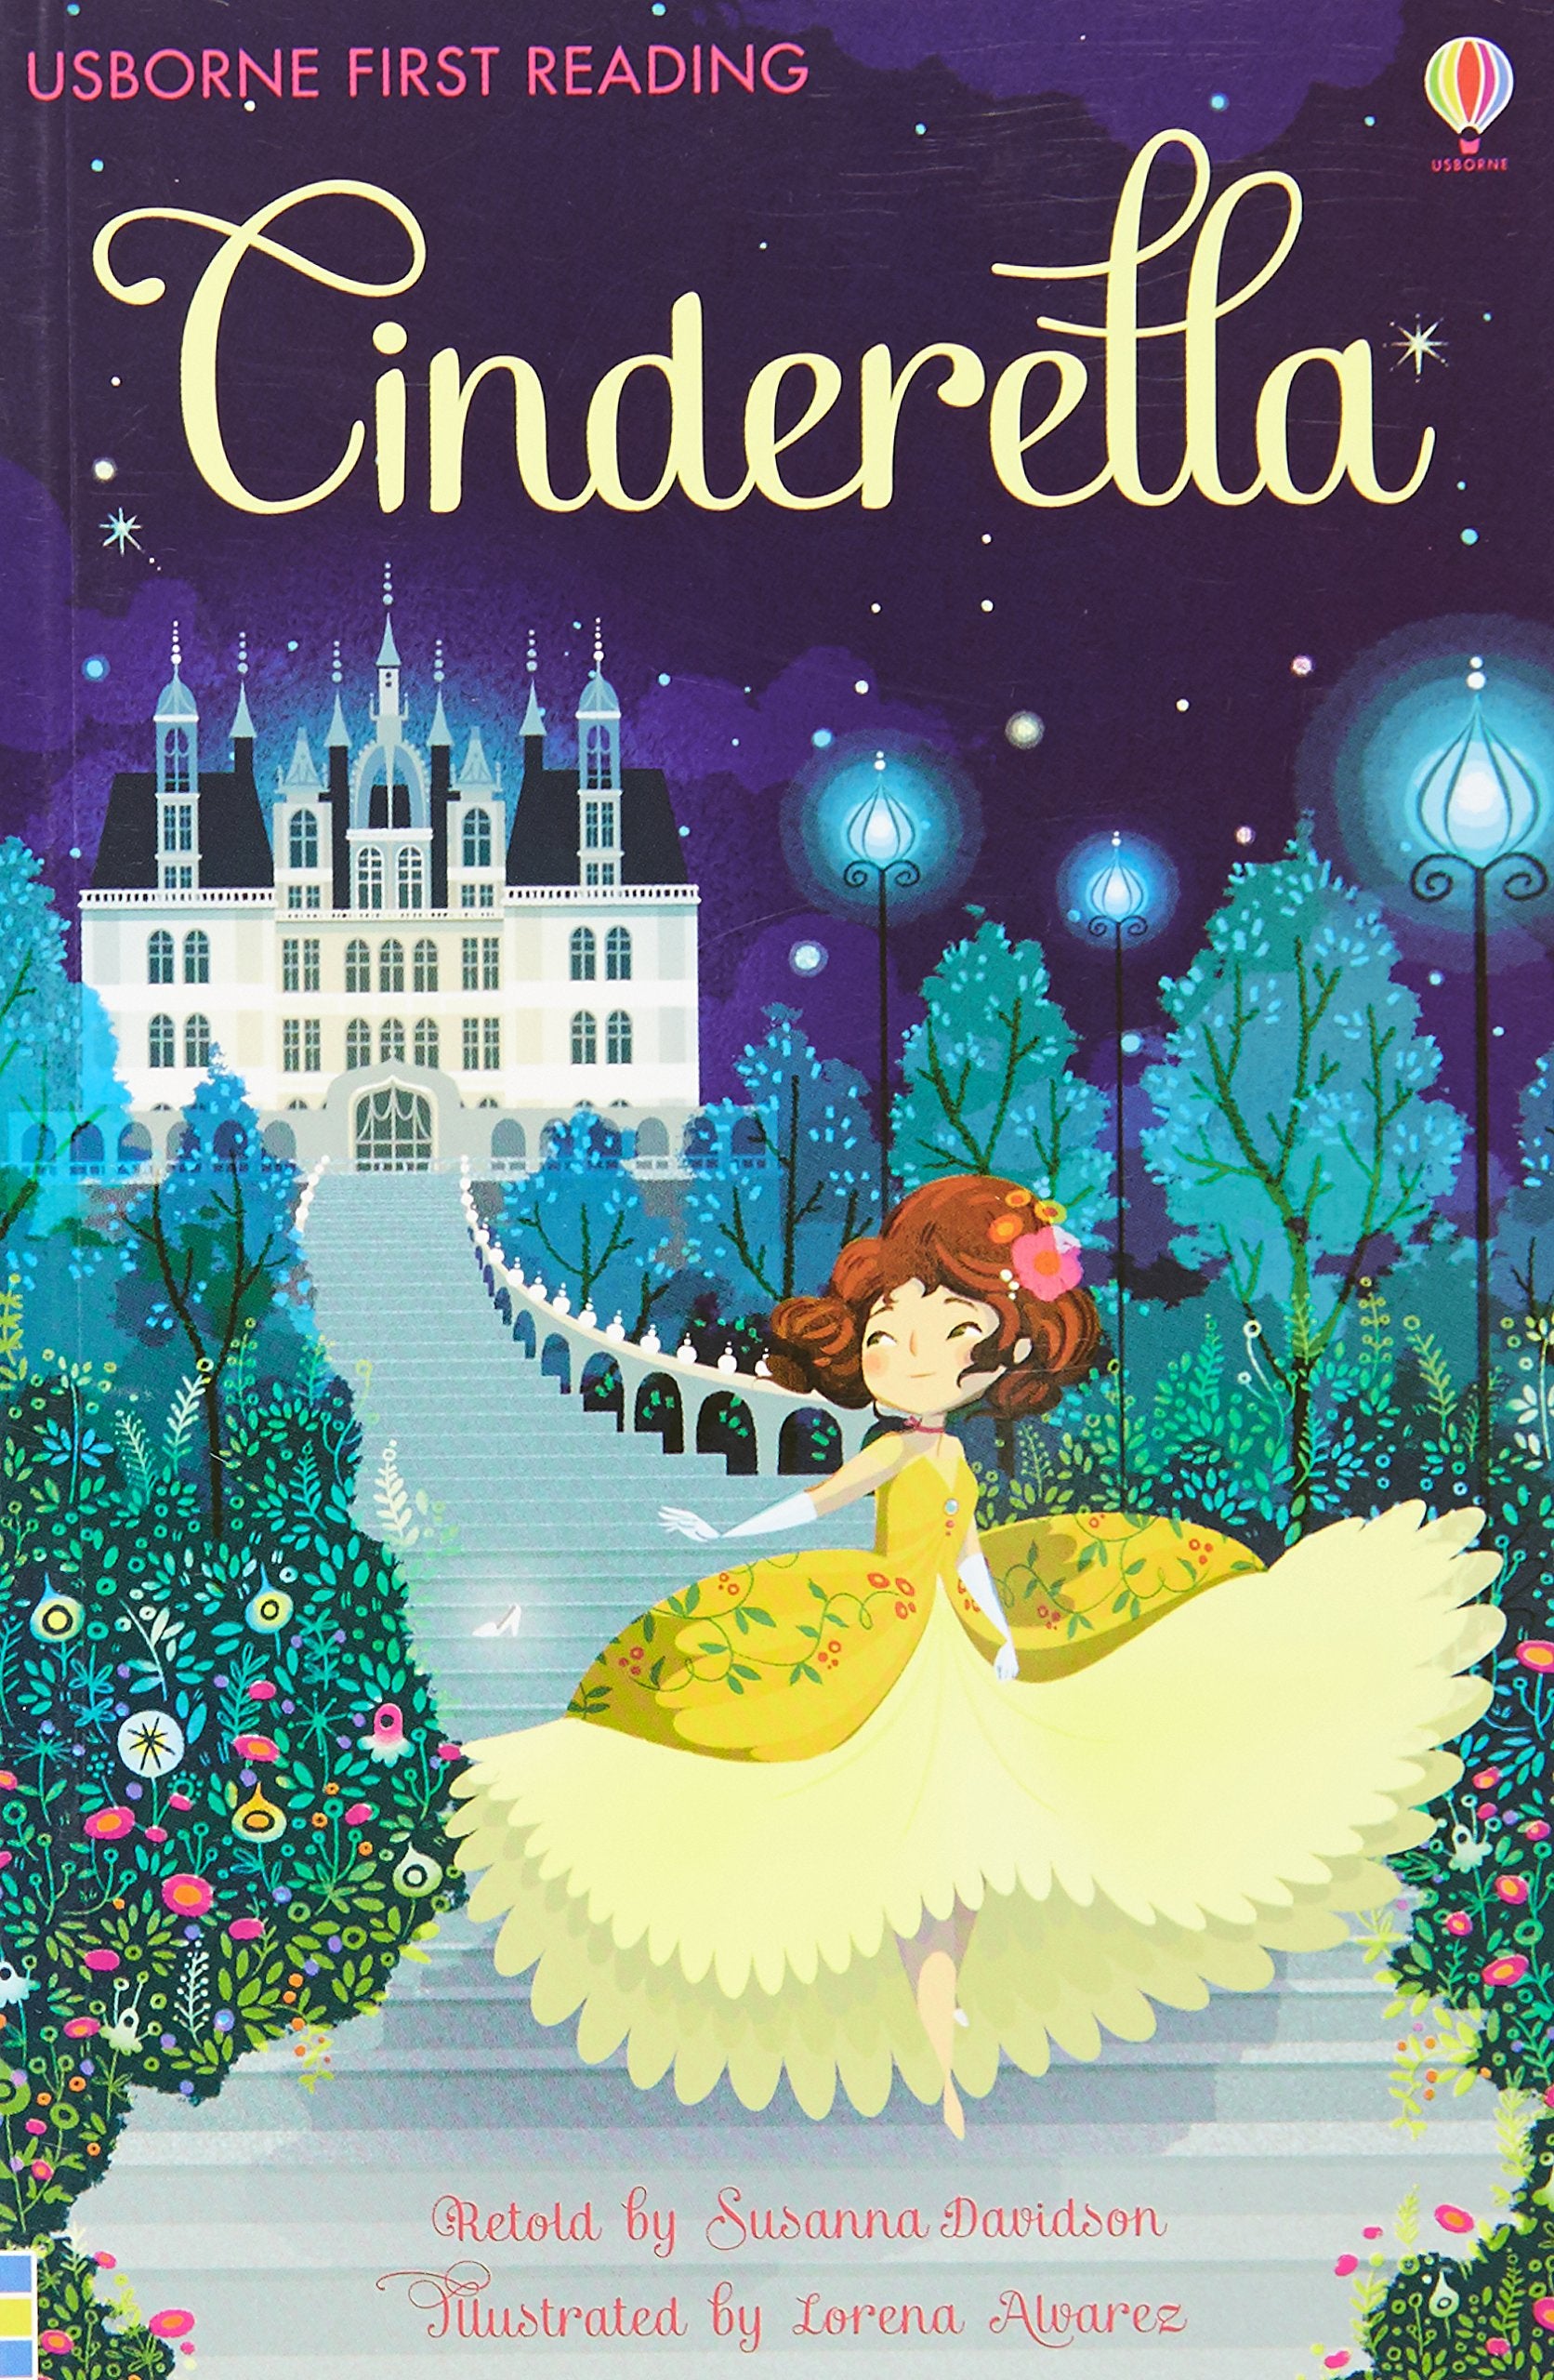 Usborne First Reading Level 4 : Cinderella